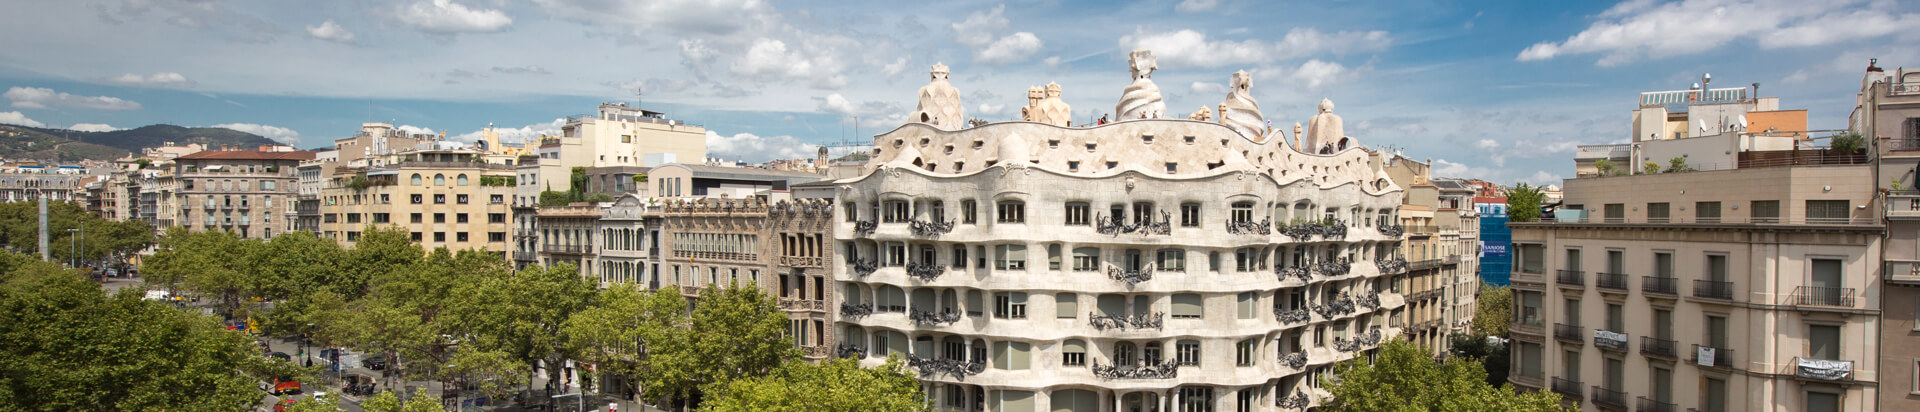 casa mila gaudi modernisme barcelona